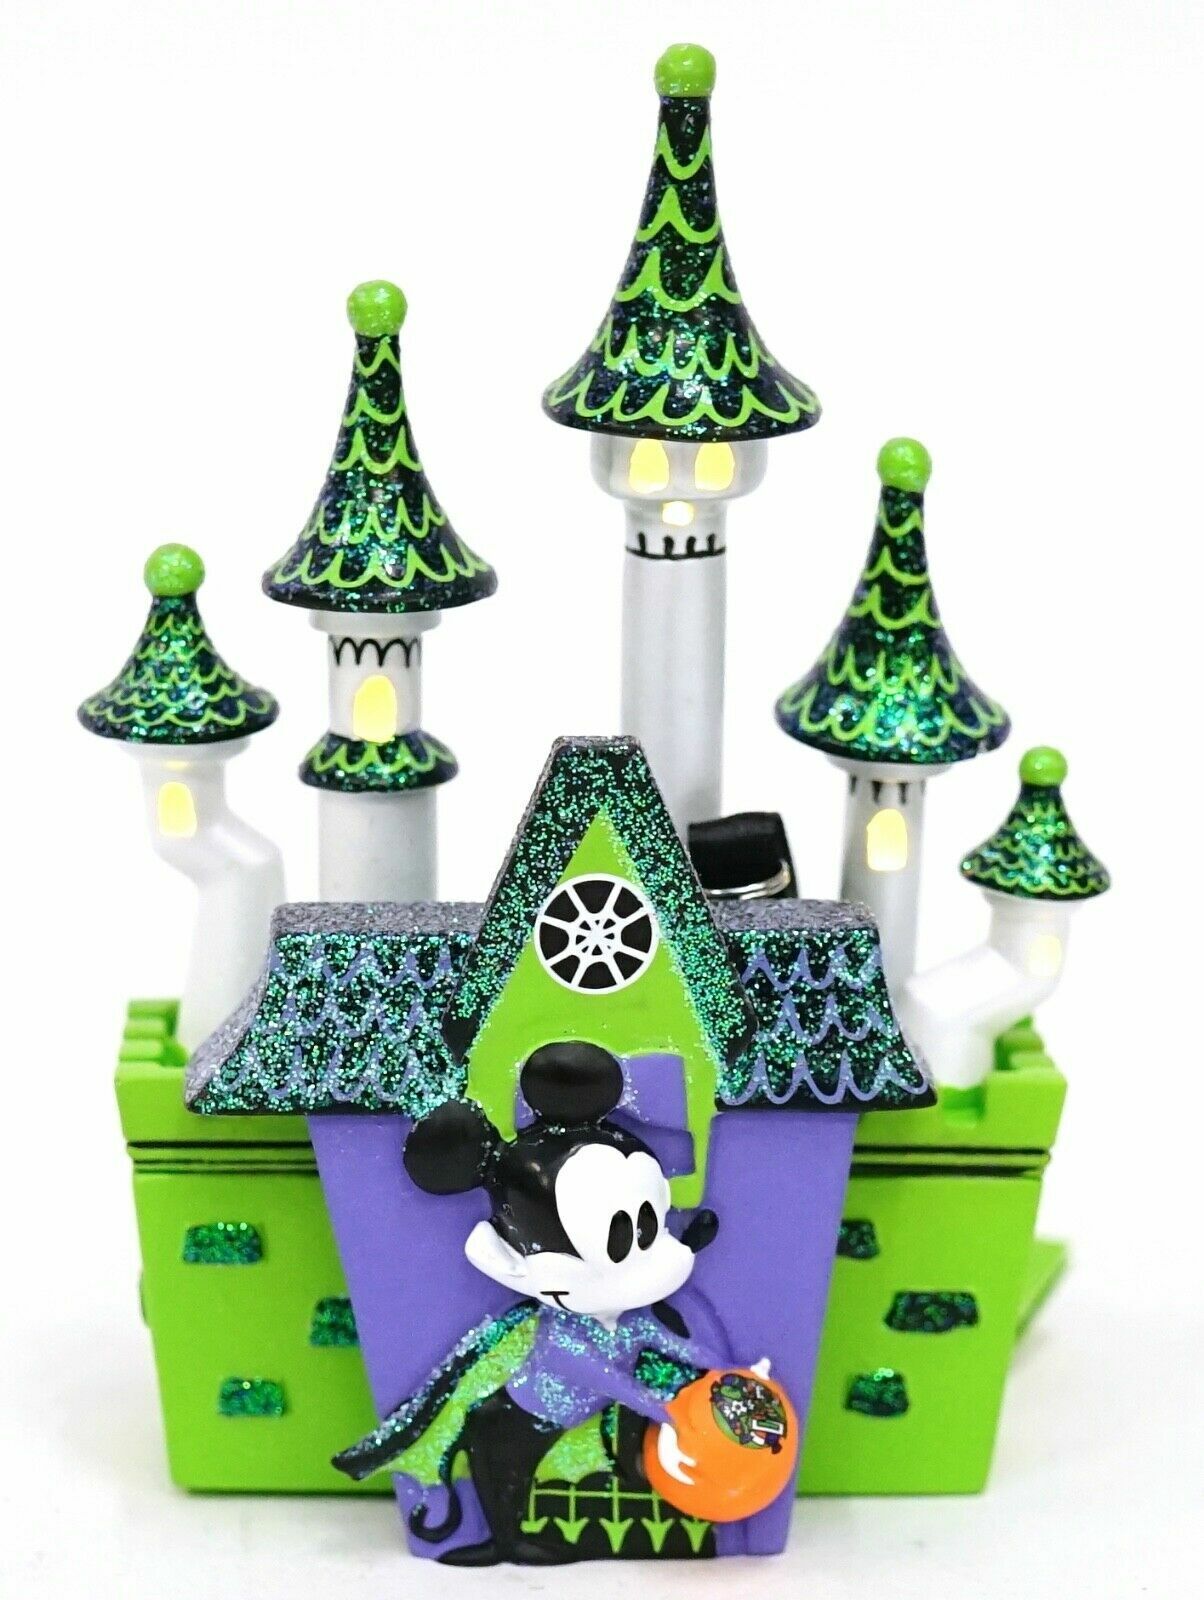 New Disney Parks 2020 Mickeys Not so Scary Halloween Party Light Up Ornament